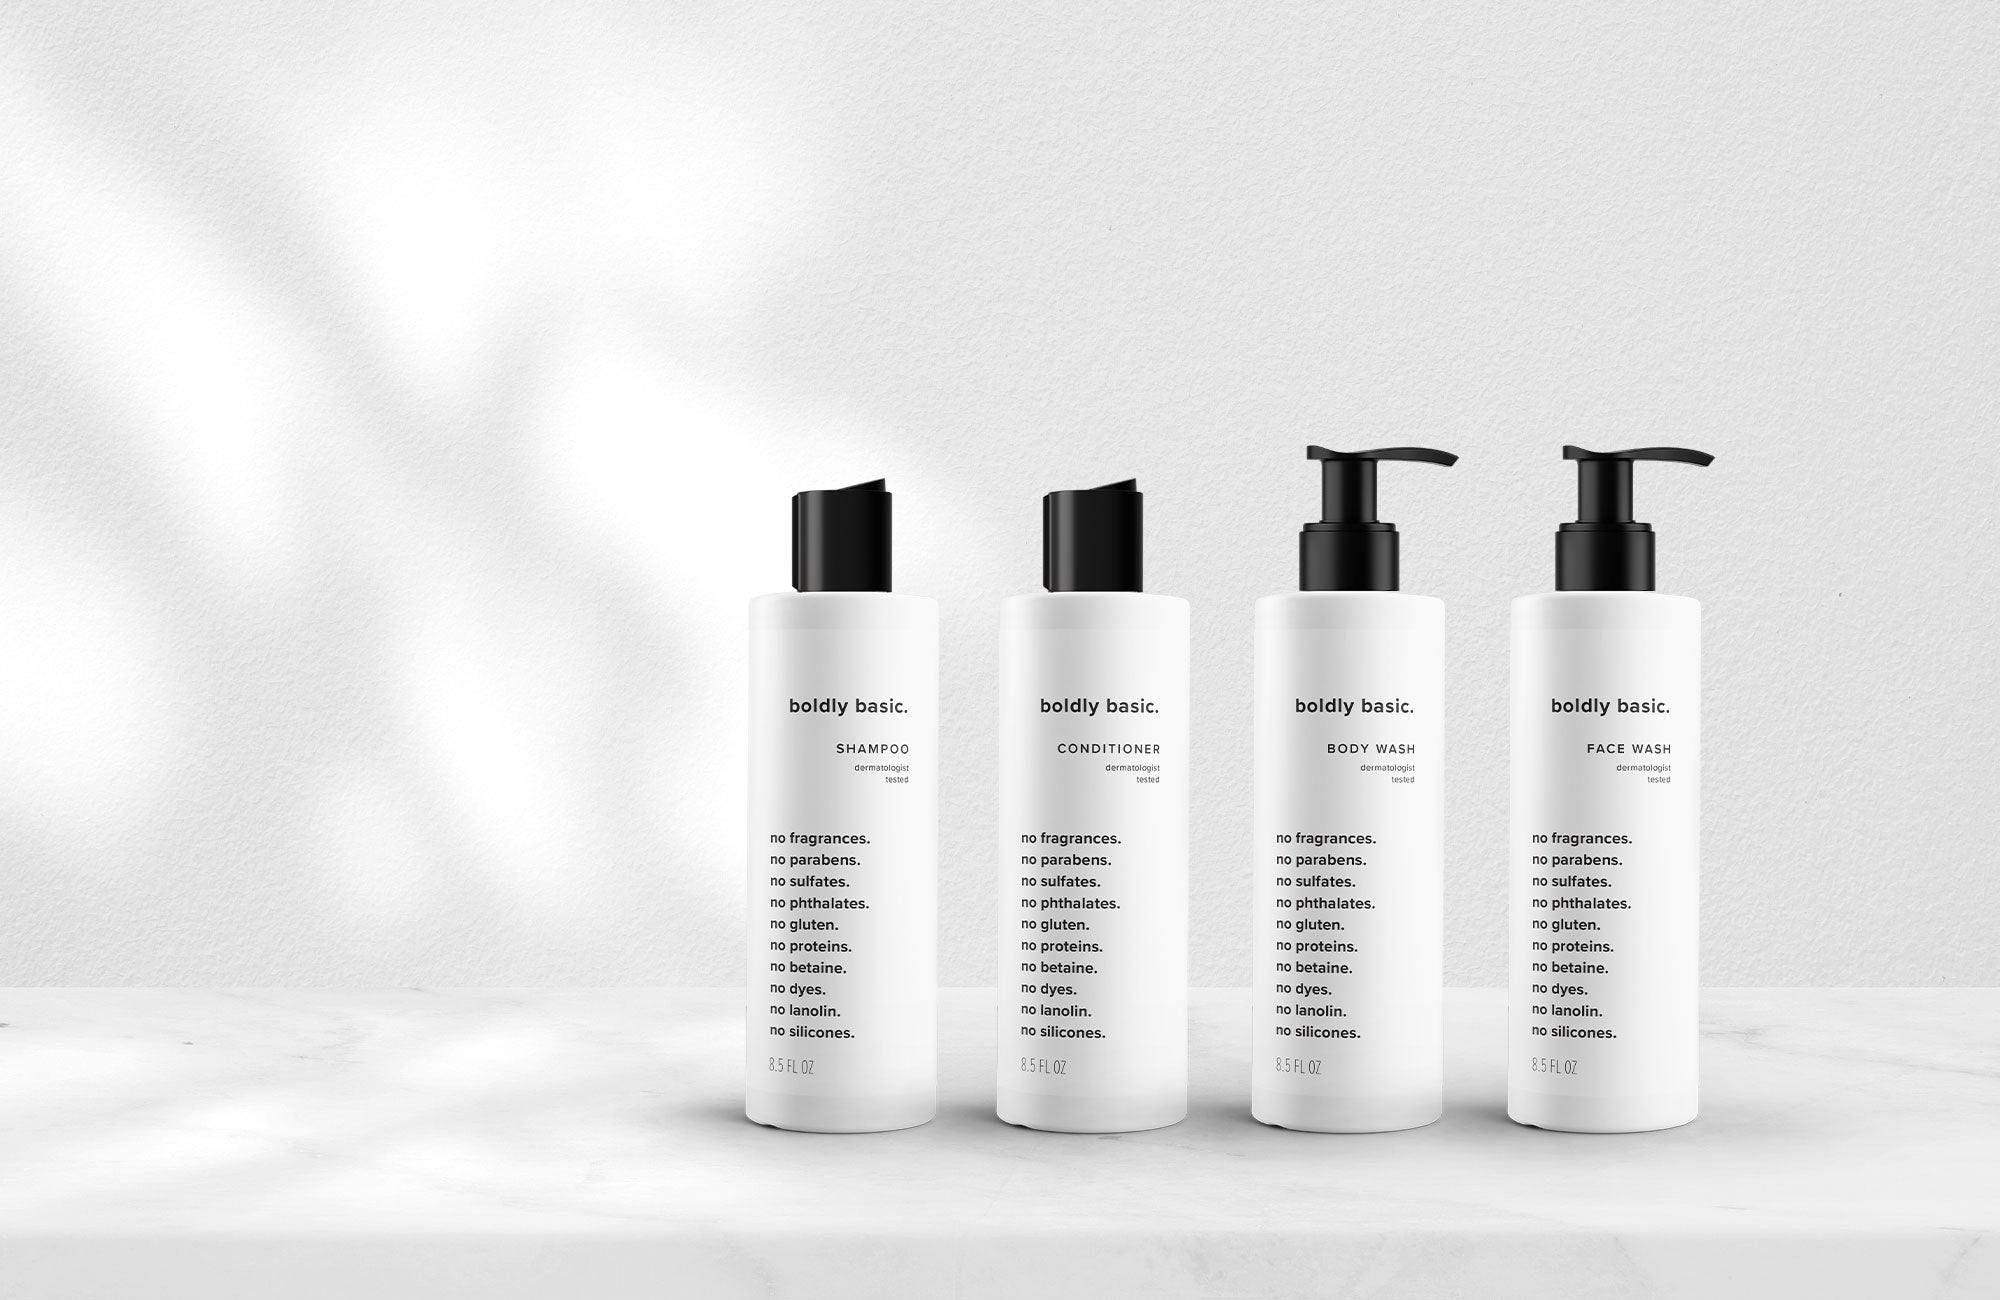 karolina krol studio boldly basic no parabens minimalist skincare sustainable brand packaging design